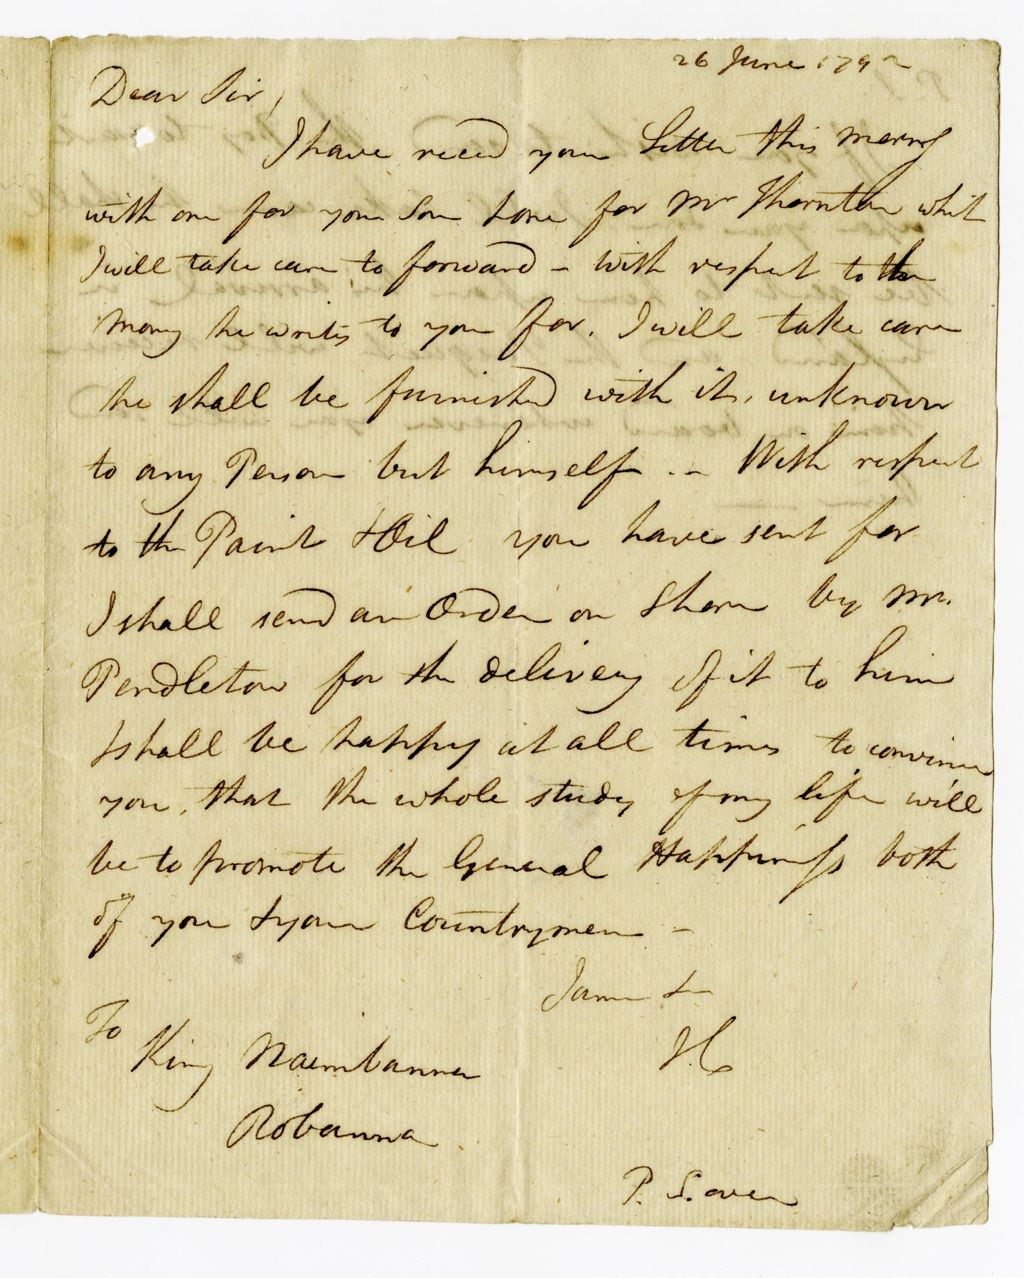 Letter from JC (John Clarkson?) to King Naimbanna